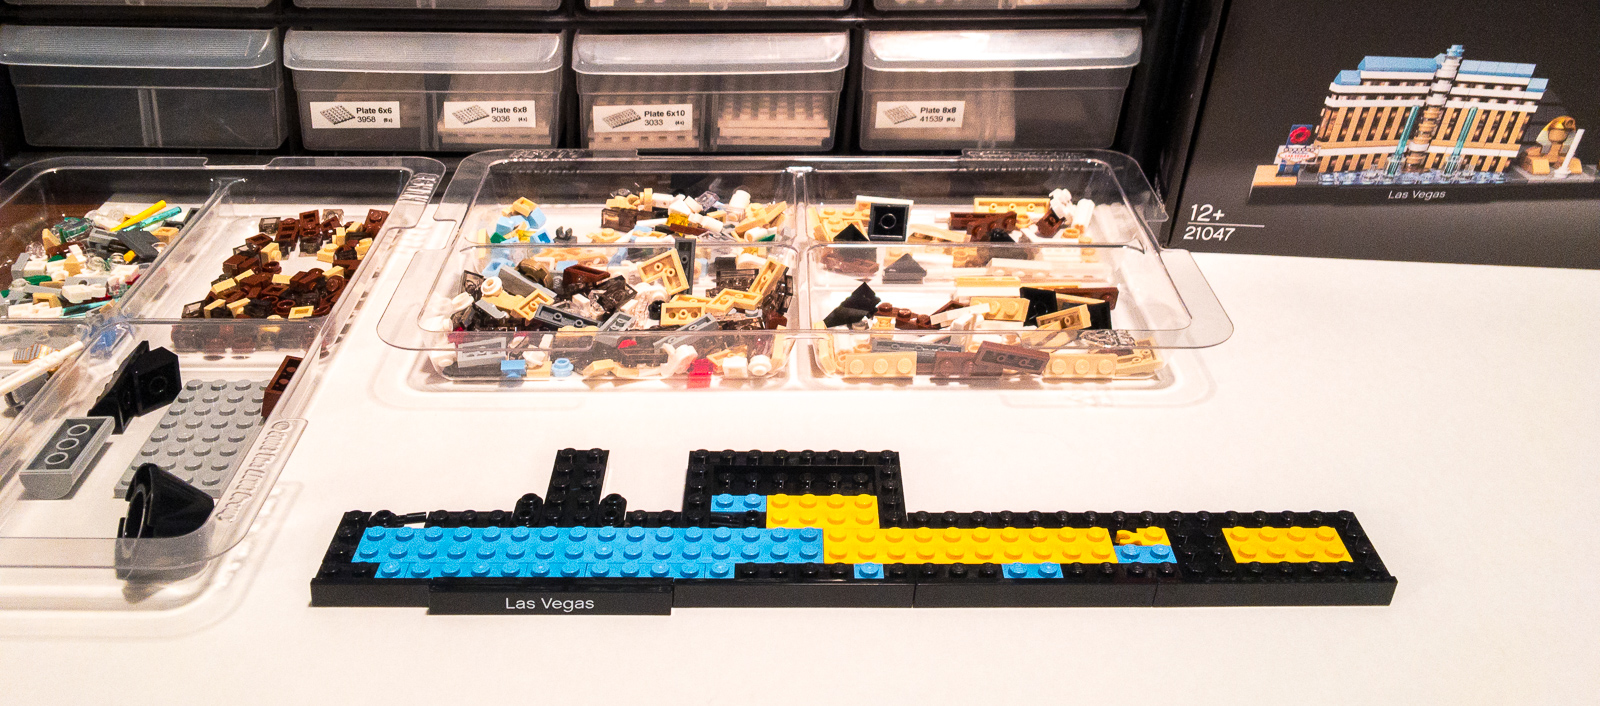 Lego Las Vegas Skyline - NEW - toys & games - by owner - sale - craigslist